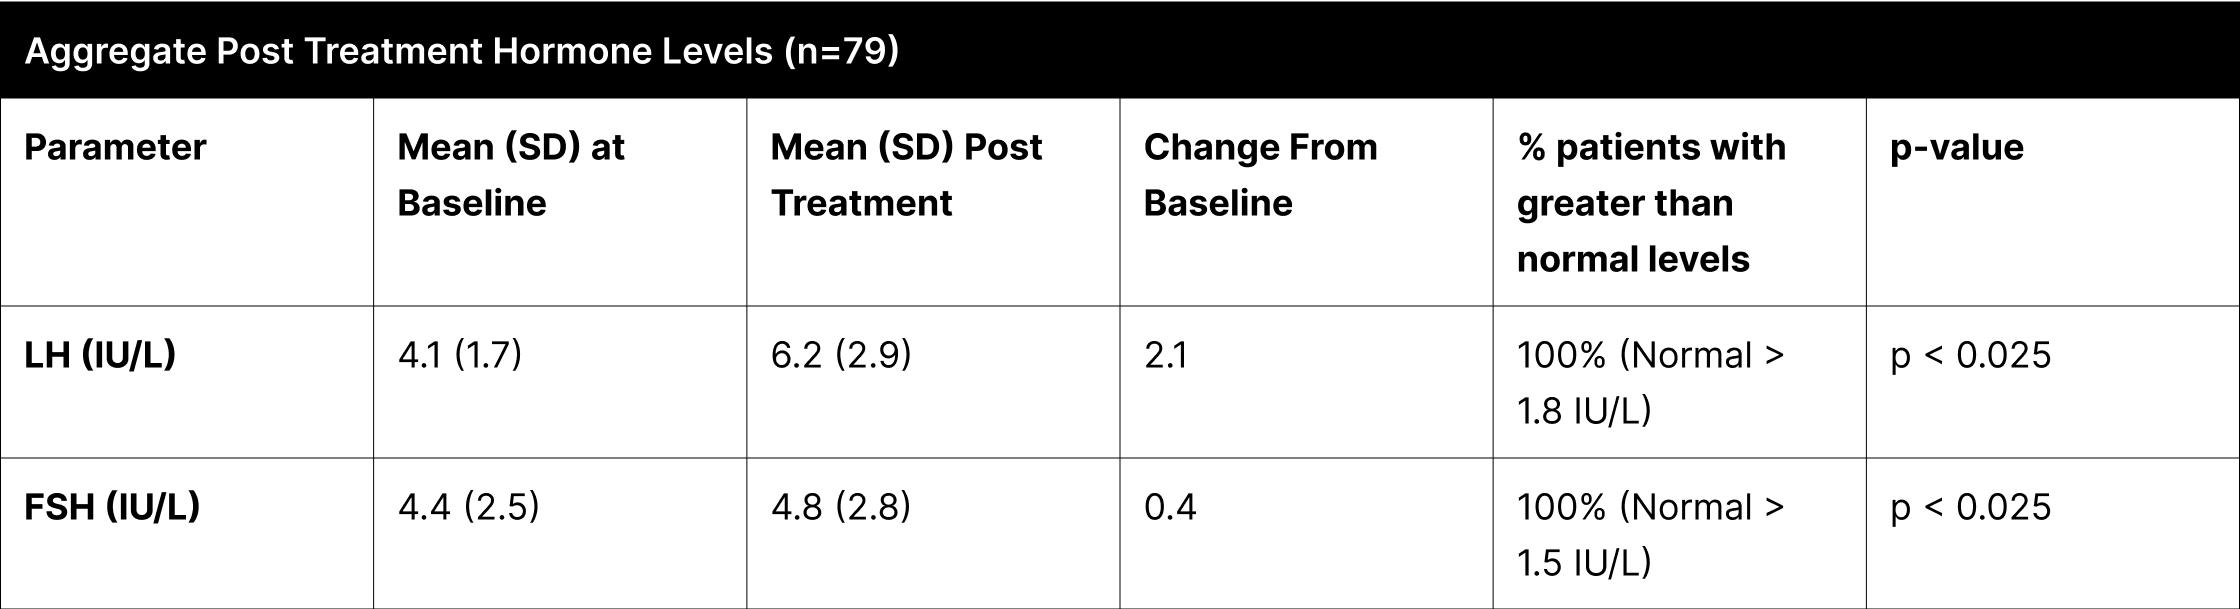 Aggregate Post Treatment Hormone Levels (n=79)